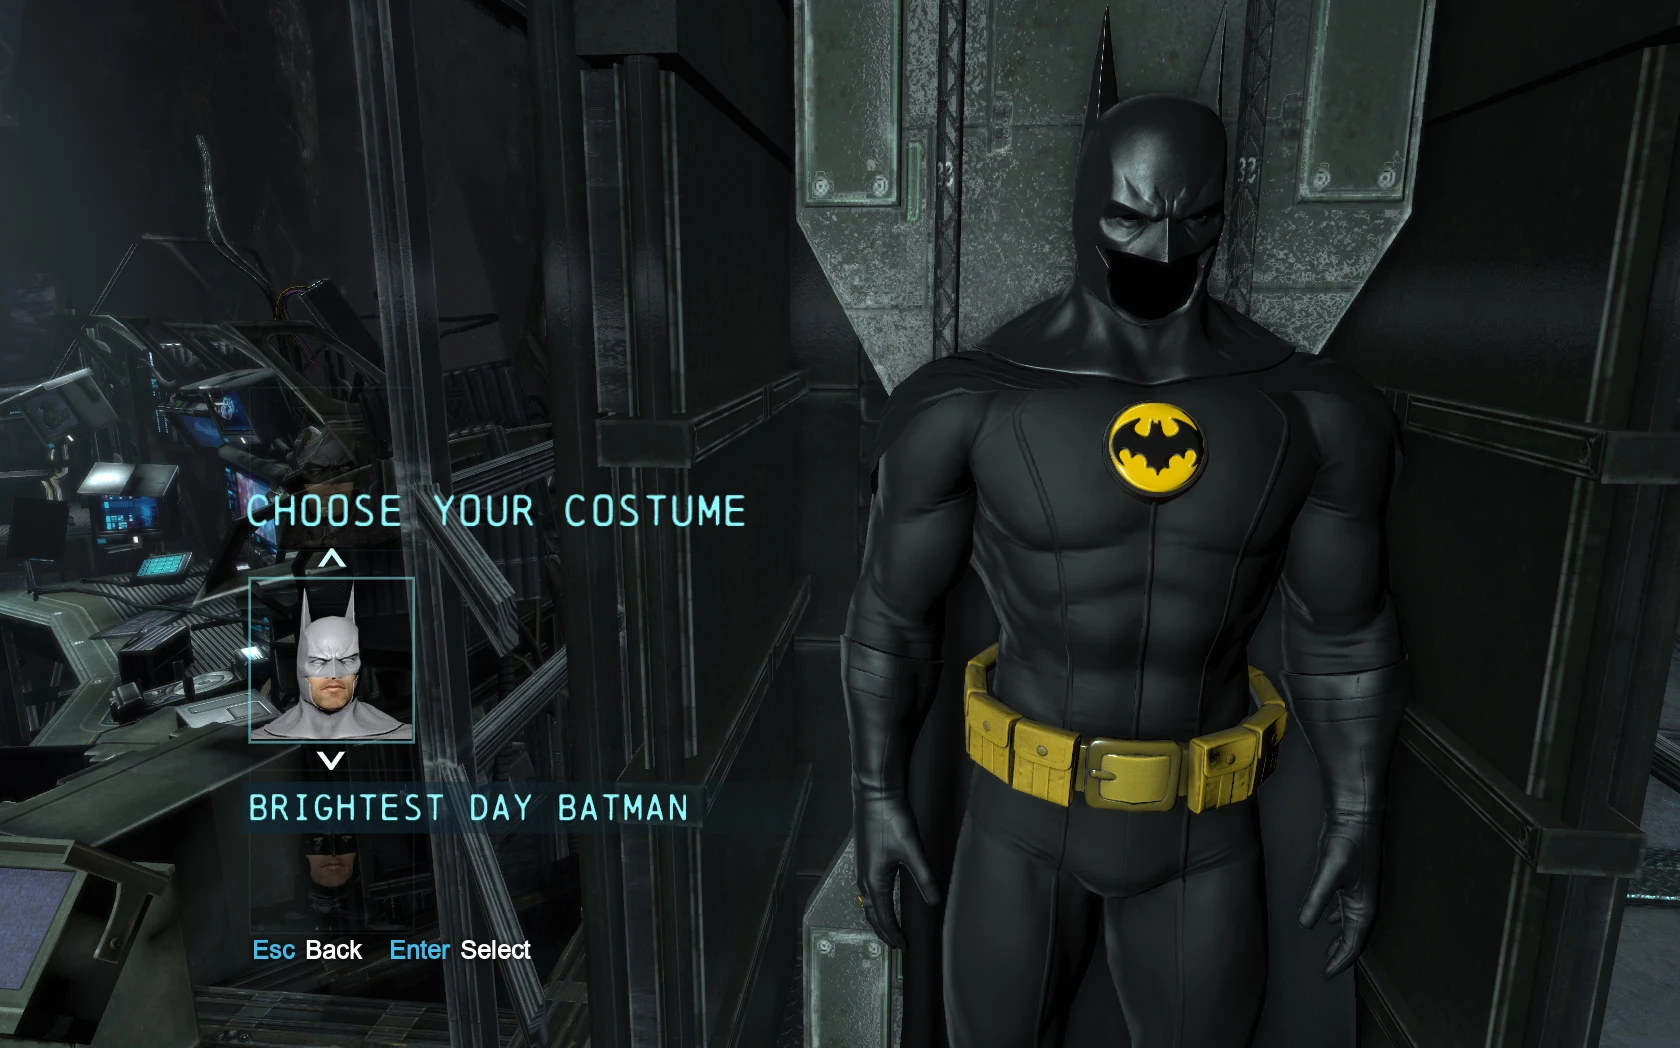 Nexus batman. Костюм Бэтмена Аркхем Оригинс. Бэтмен летопись Аркхема Бэткостюм. Batman Origins костюмы. Бэтмен Аркхем Найт костюм.